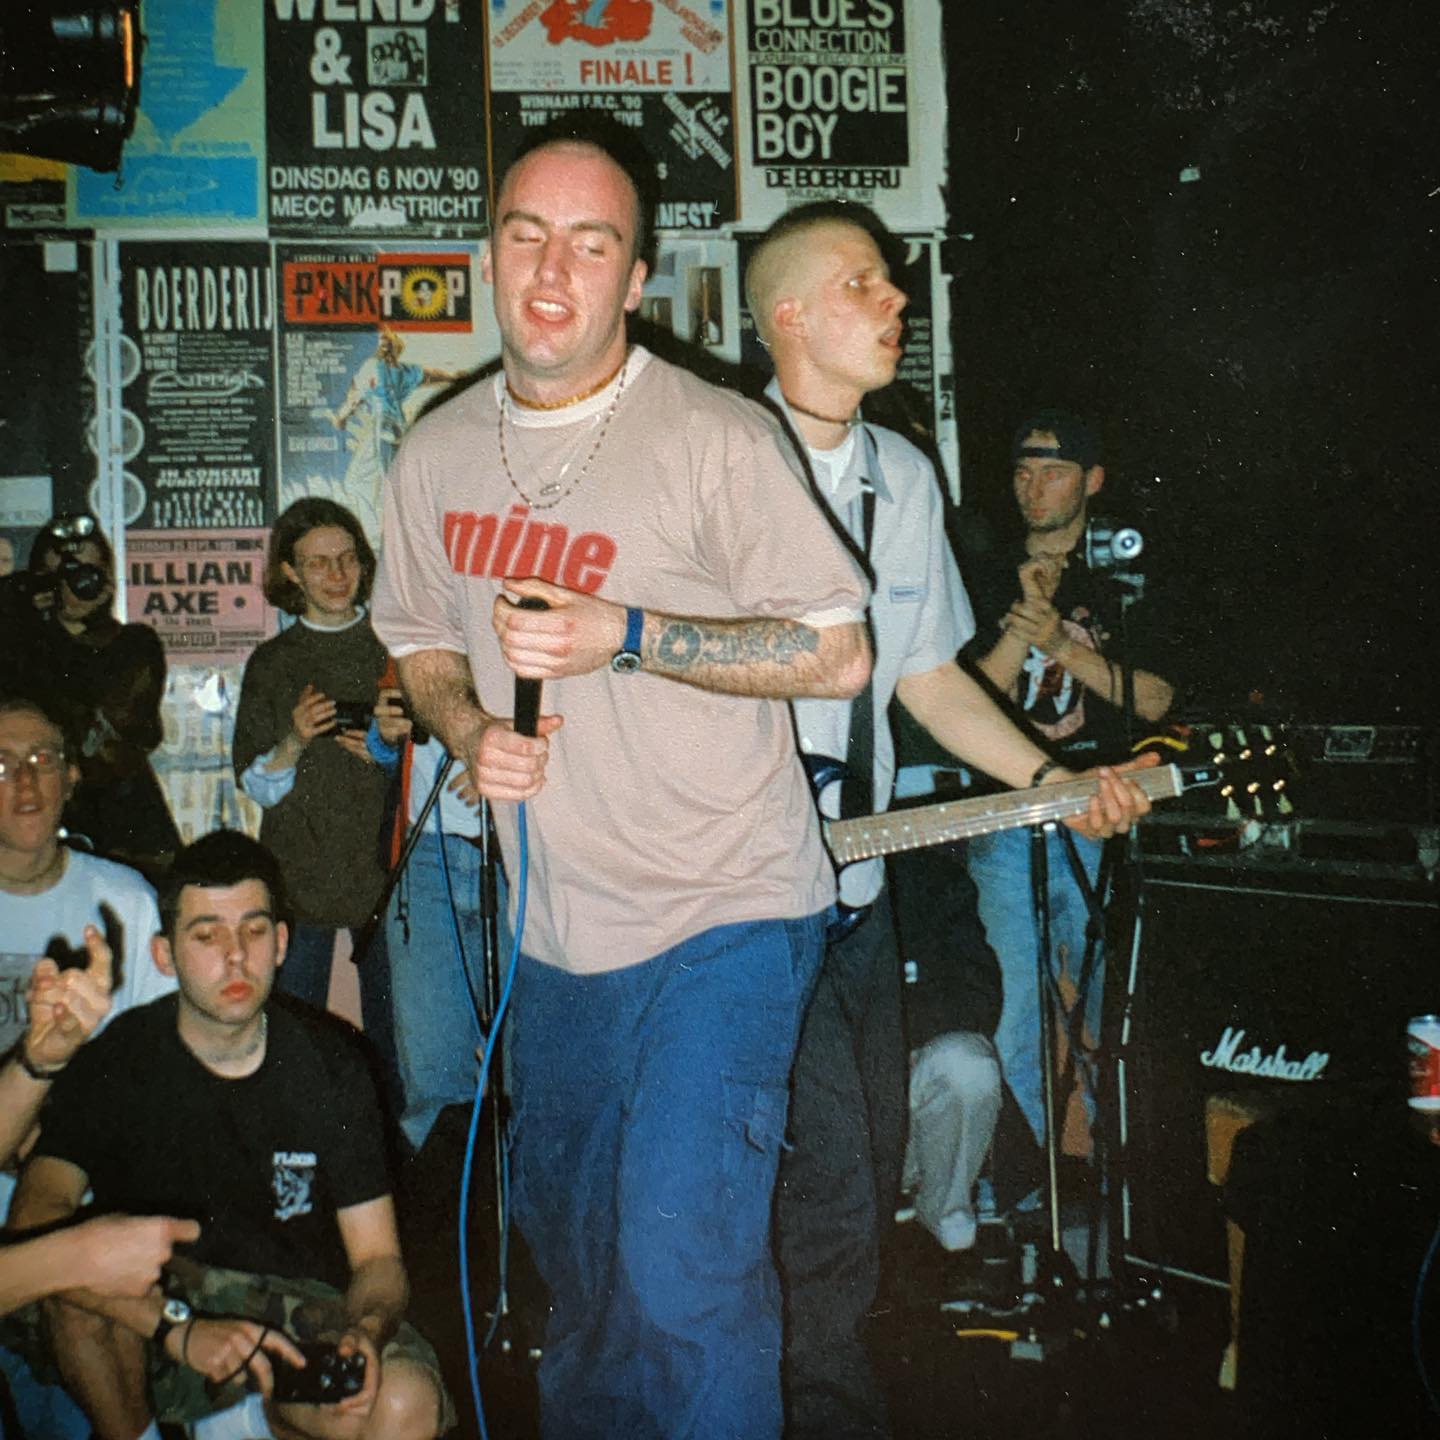 Veil - Hardcore fest Geleen - 8/9 March 1997 #straightedge #hardcore #punkrock #harekrishna @xthreesomex @lookingback_ography #gigpic by @twentylandcrew